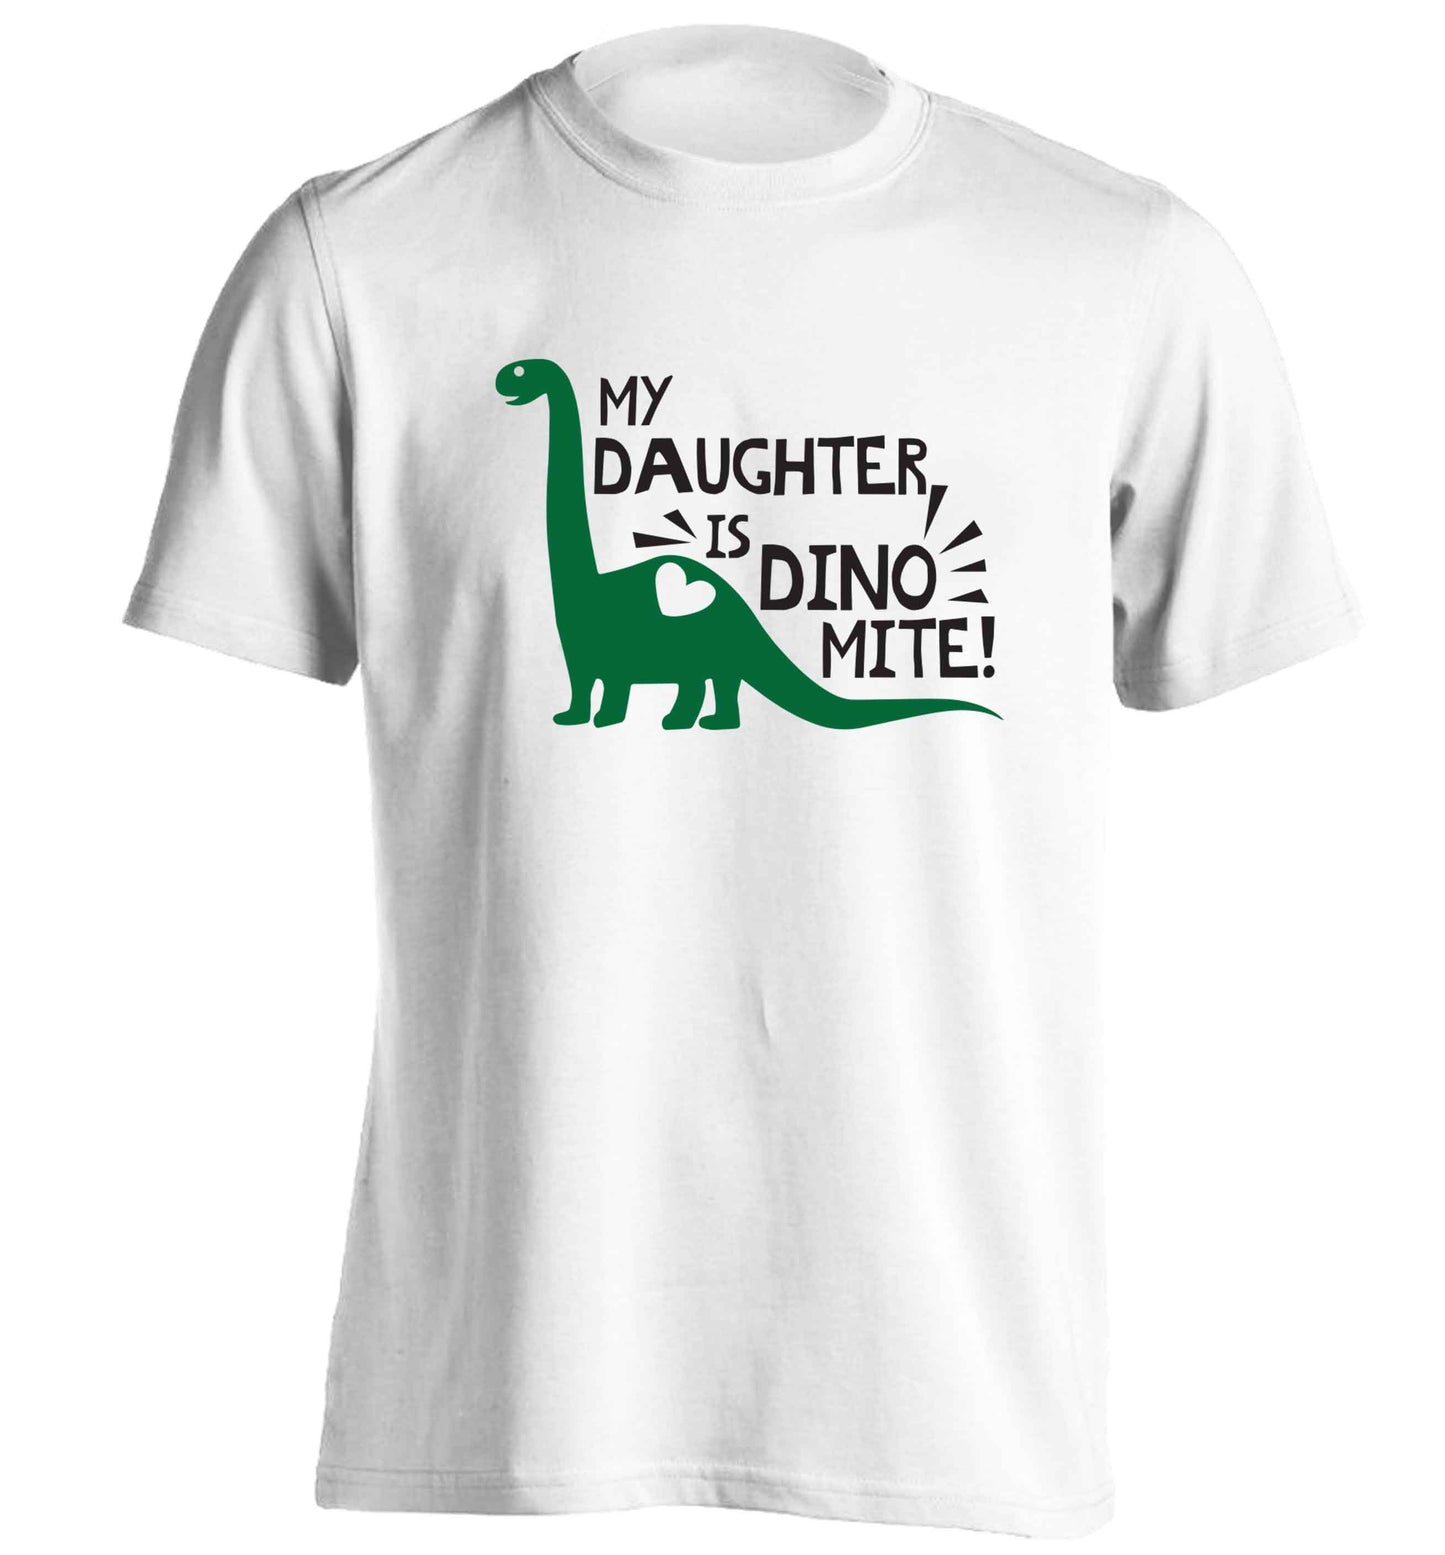 My daughter is dinomite! adults unisex white Tshirt 2XL